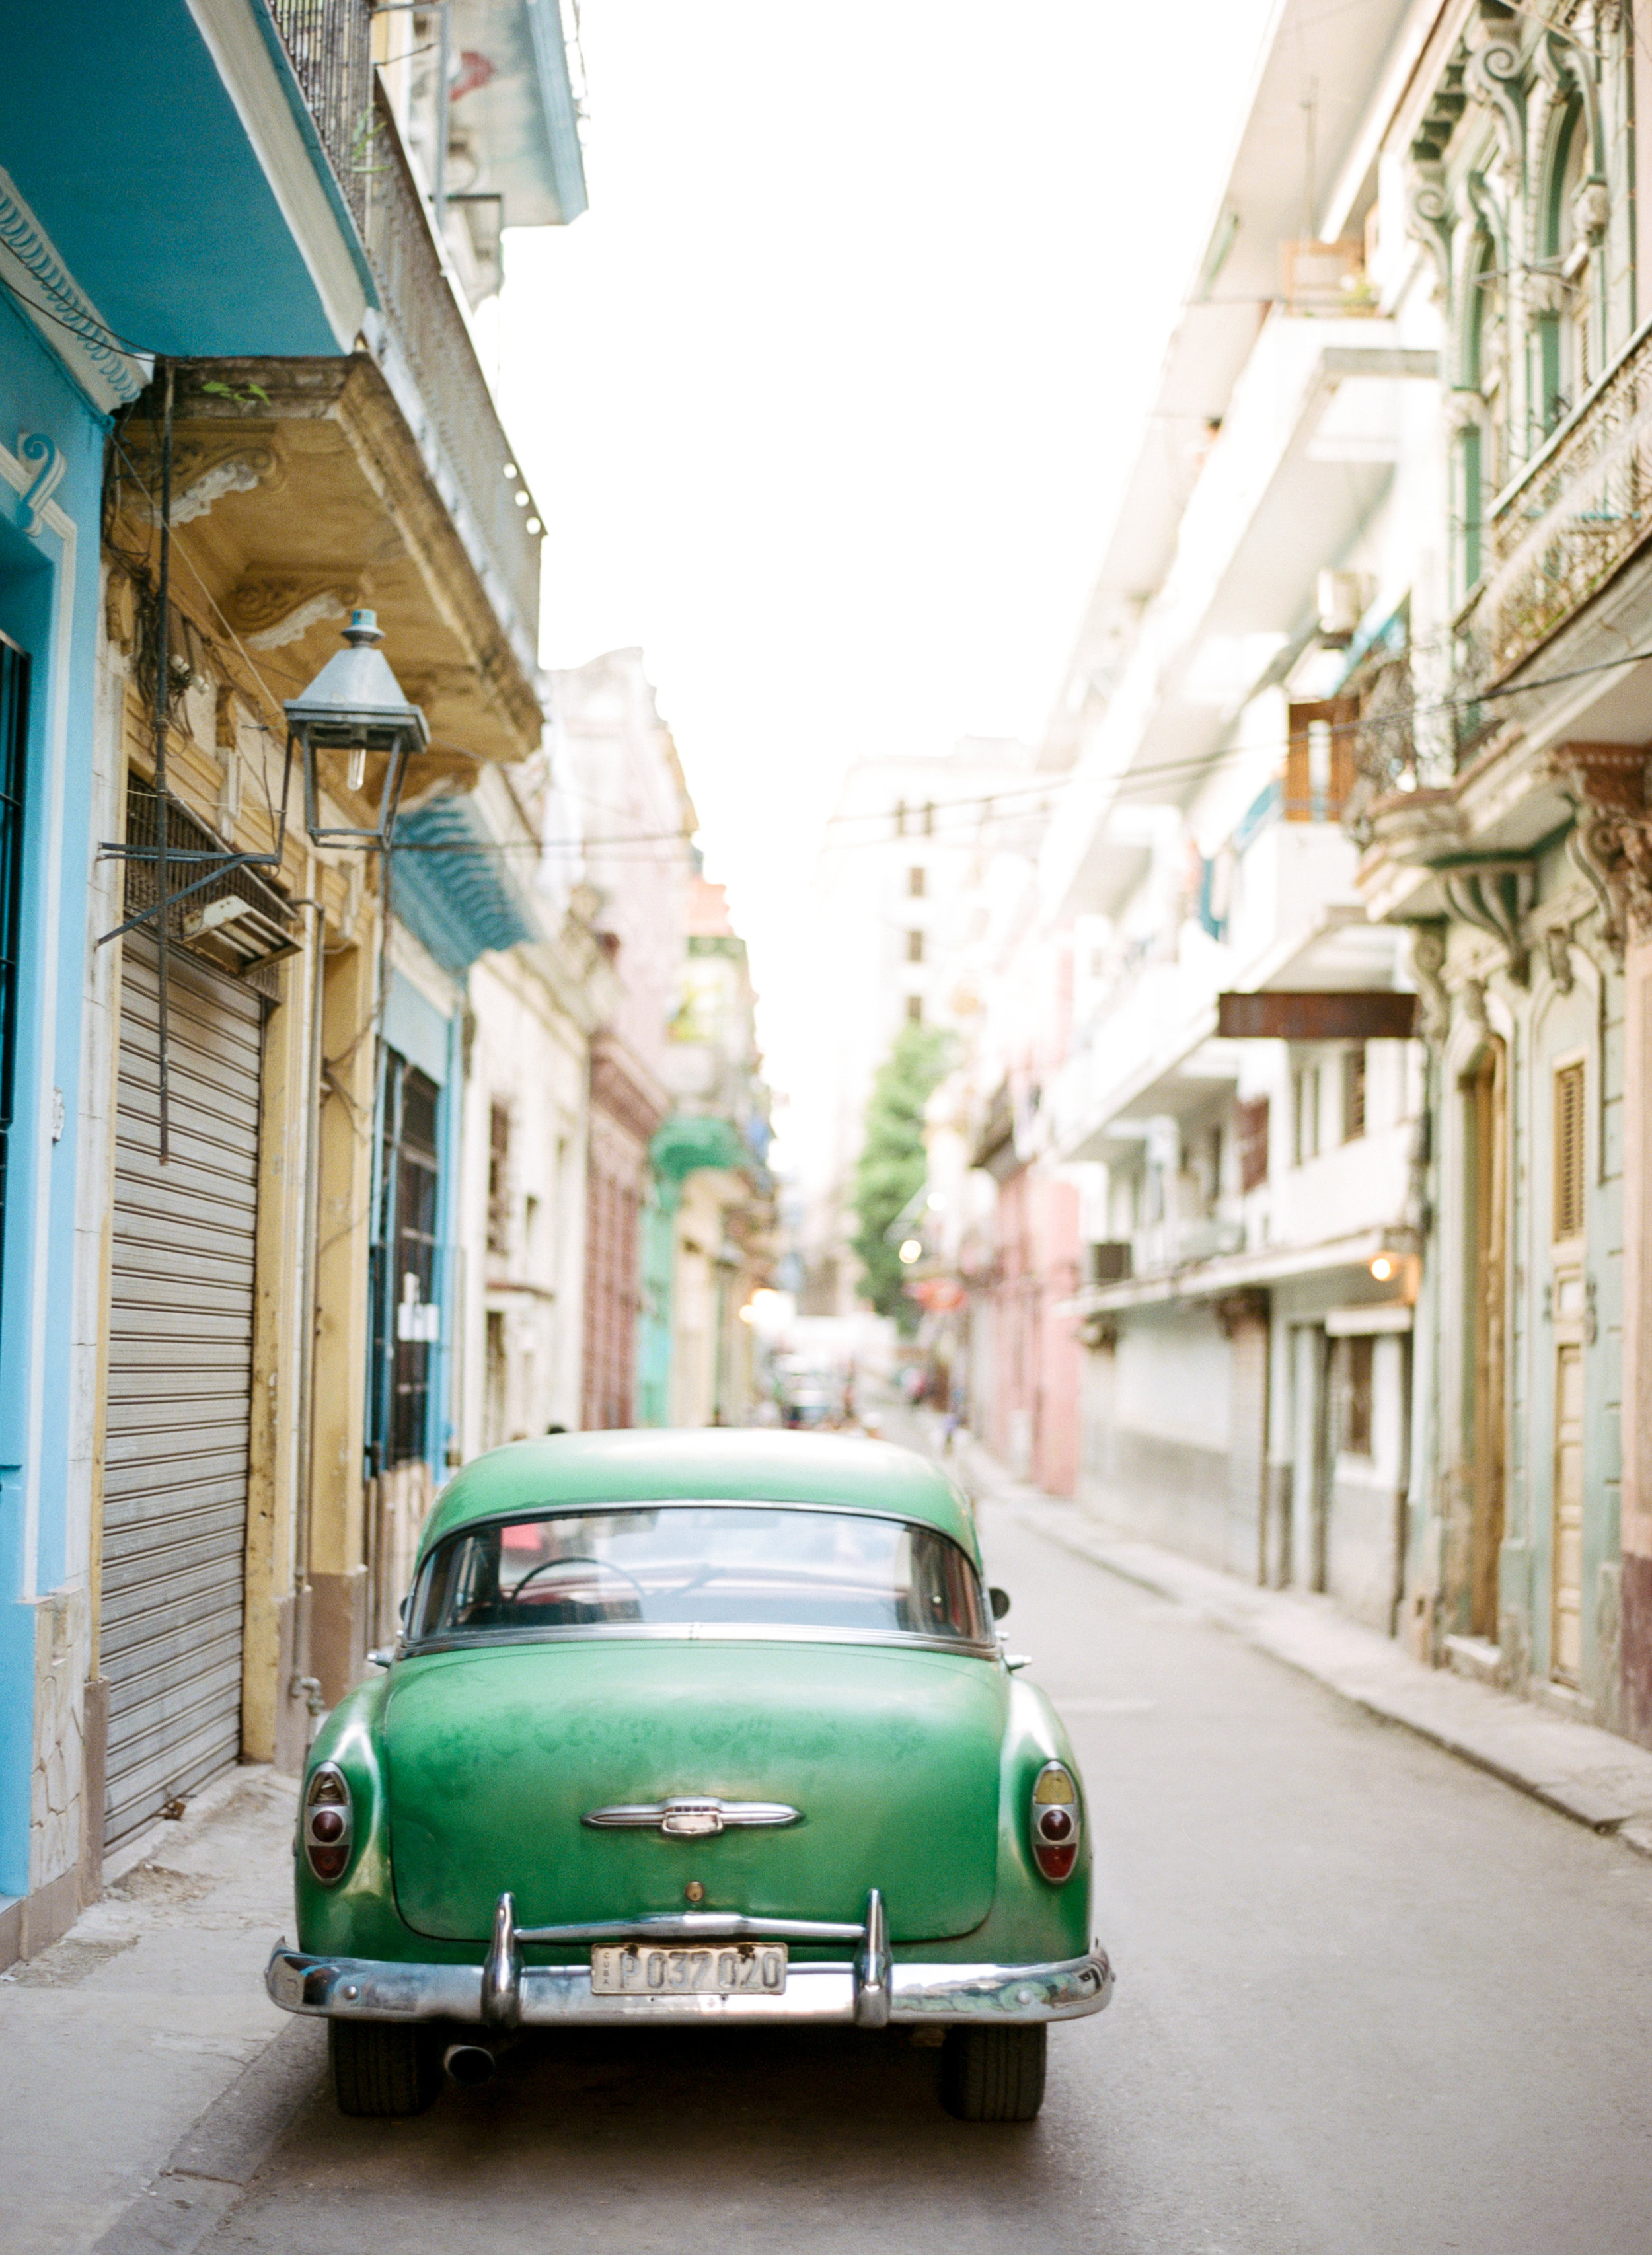 Cuba-Travel-photography-rachael-mcitnosh-photography-56.jpg